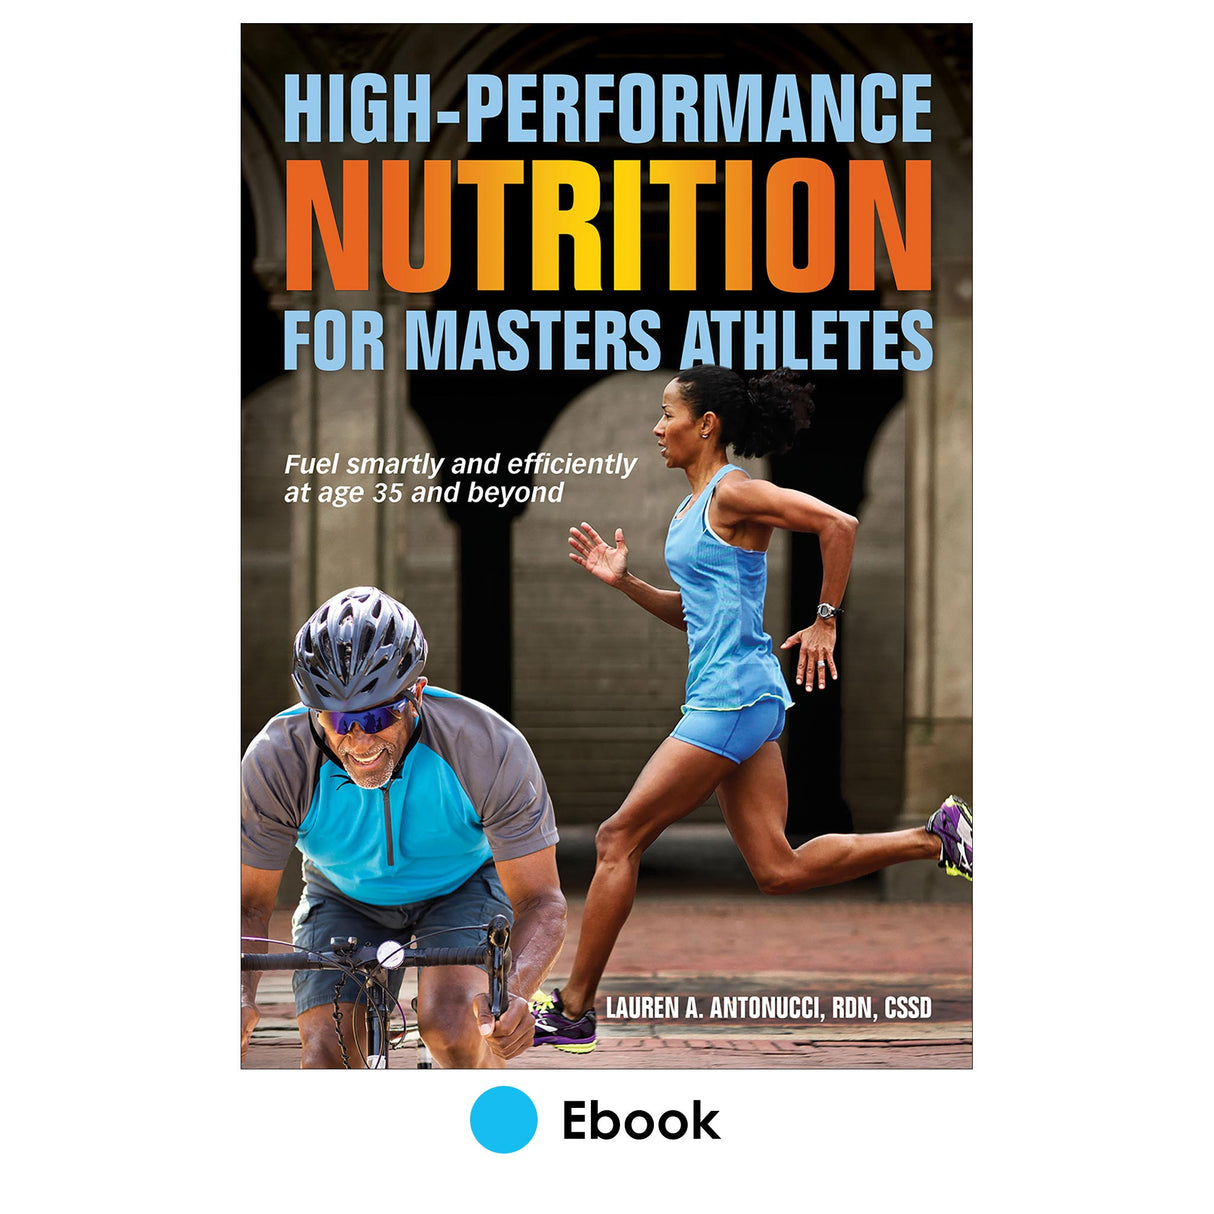 High-Performance Nutrition for Masters Athletes epub